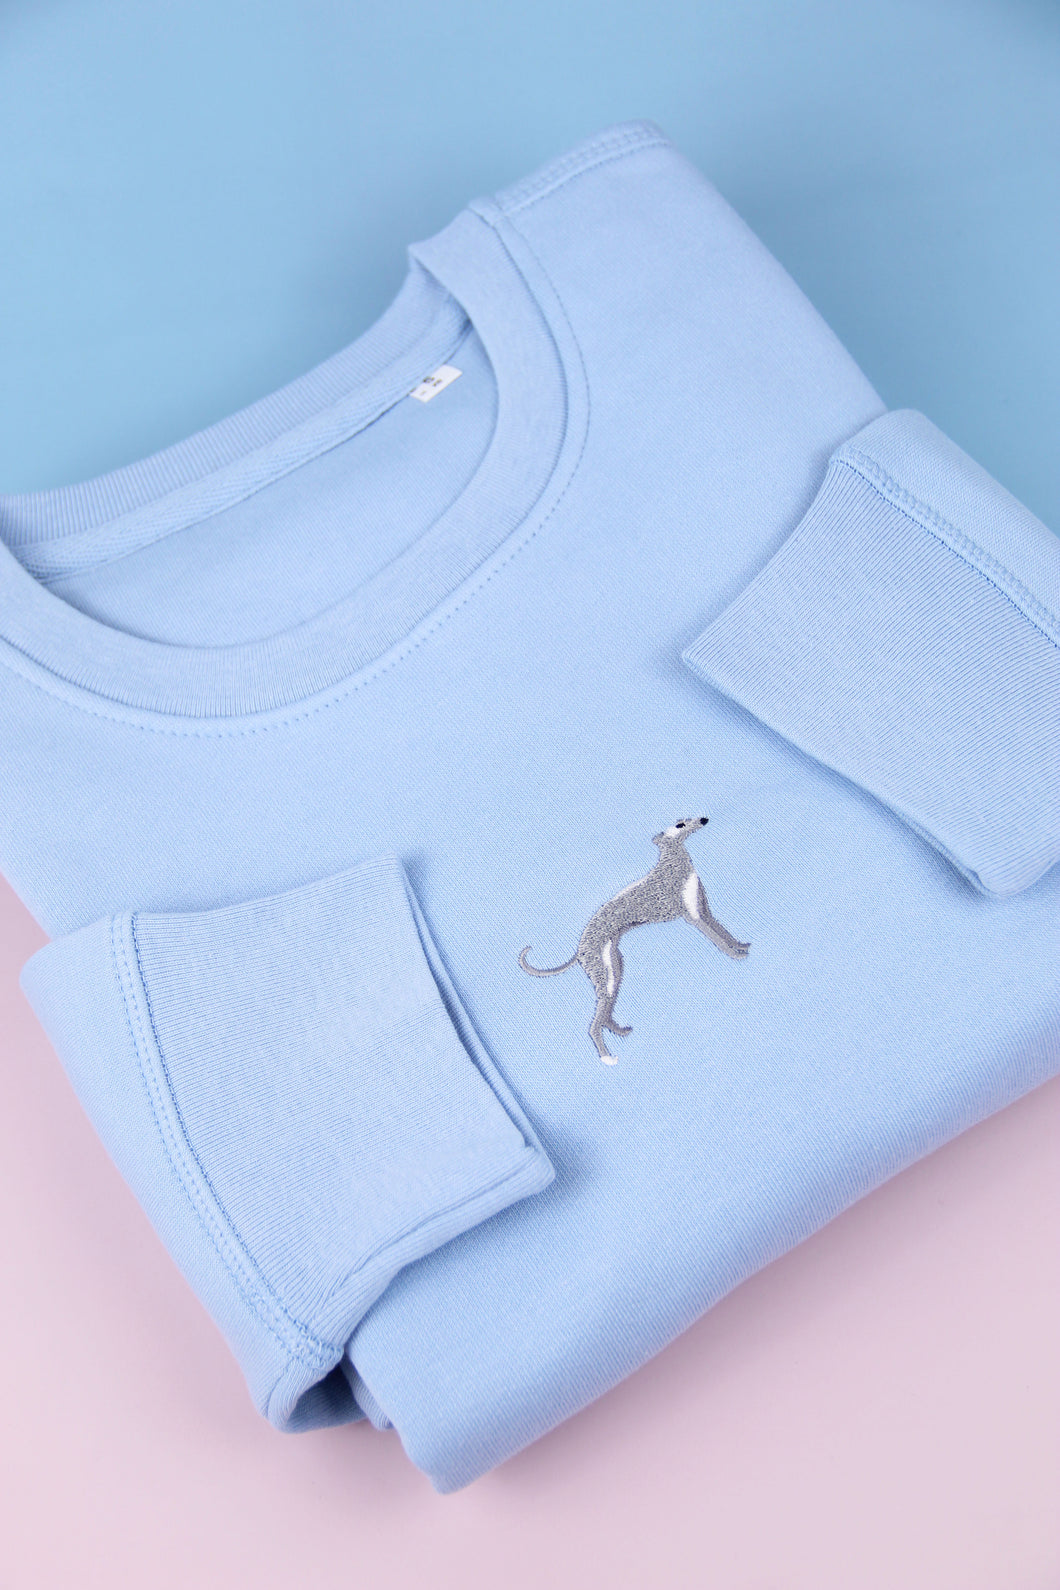 Greyhound Sweatshirt - Sky Blue